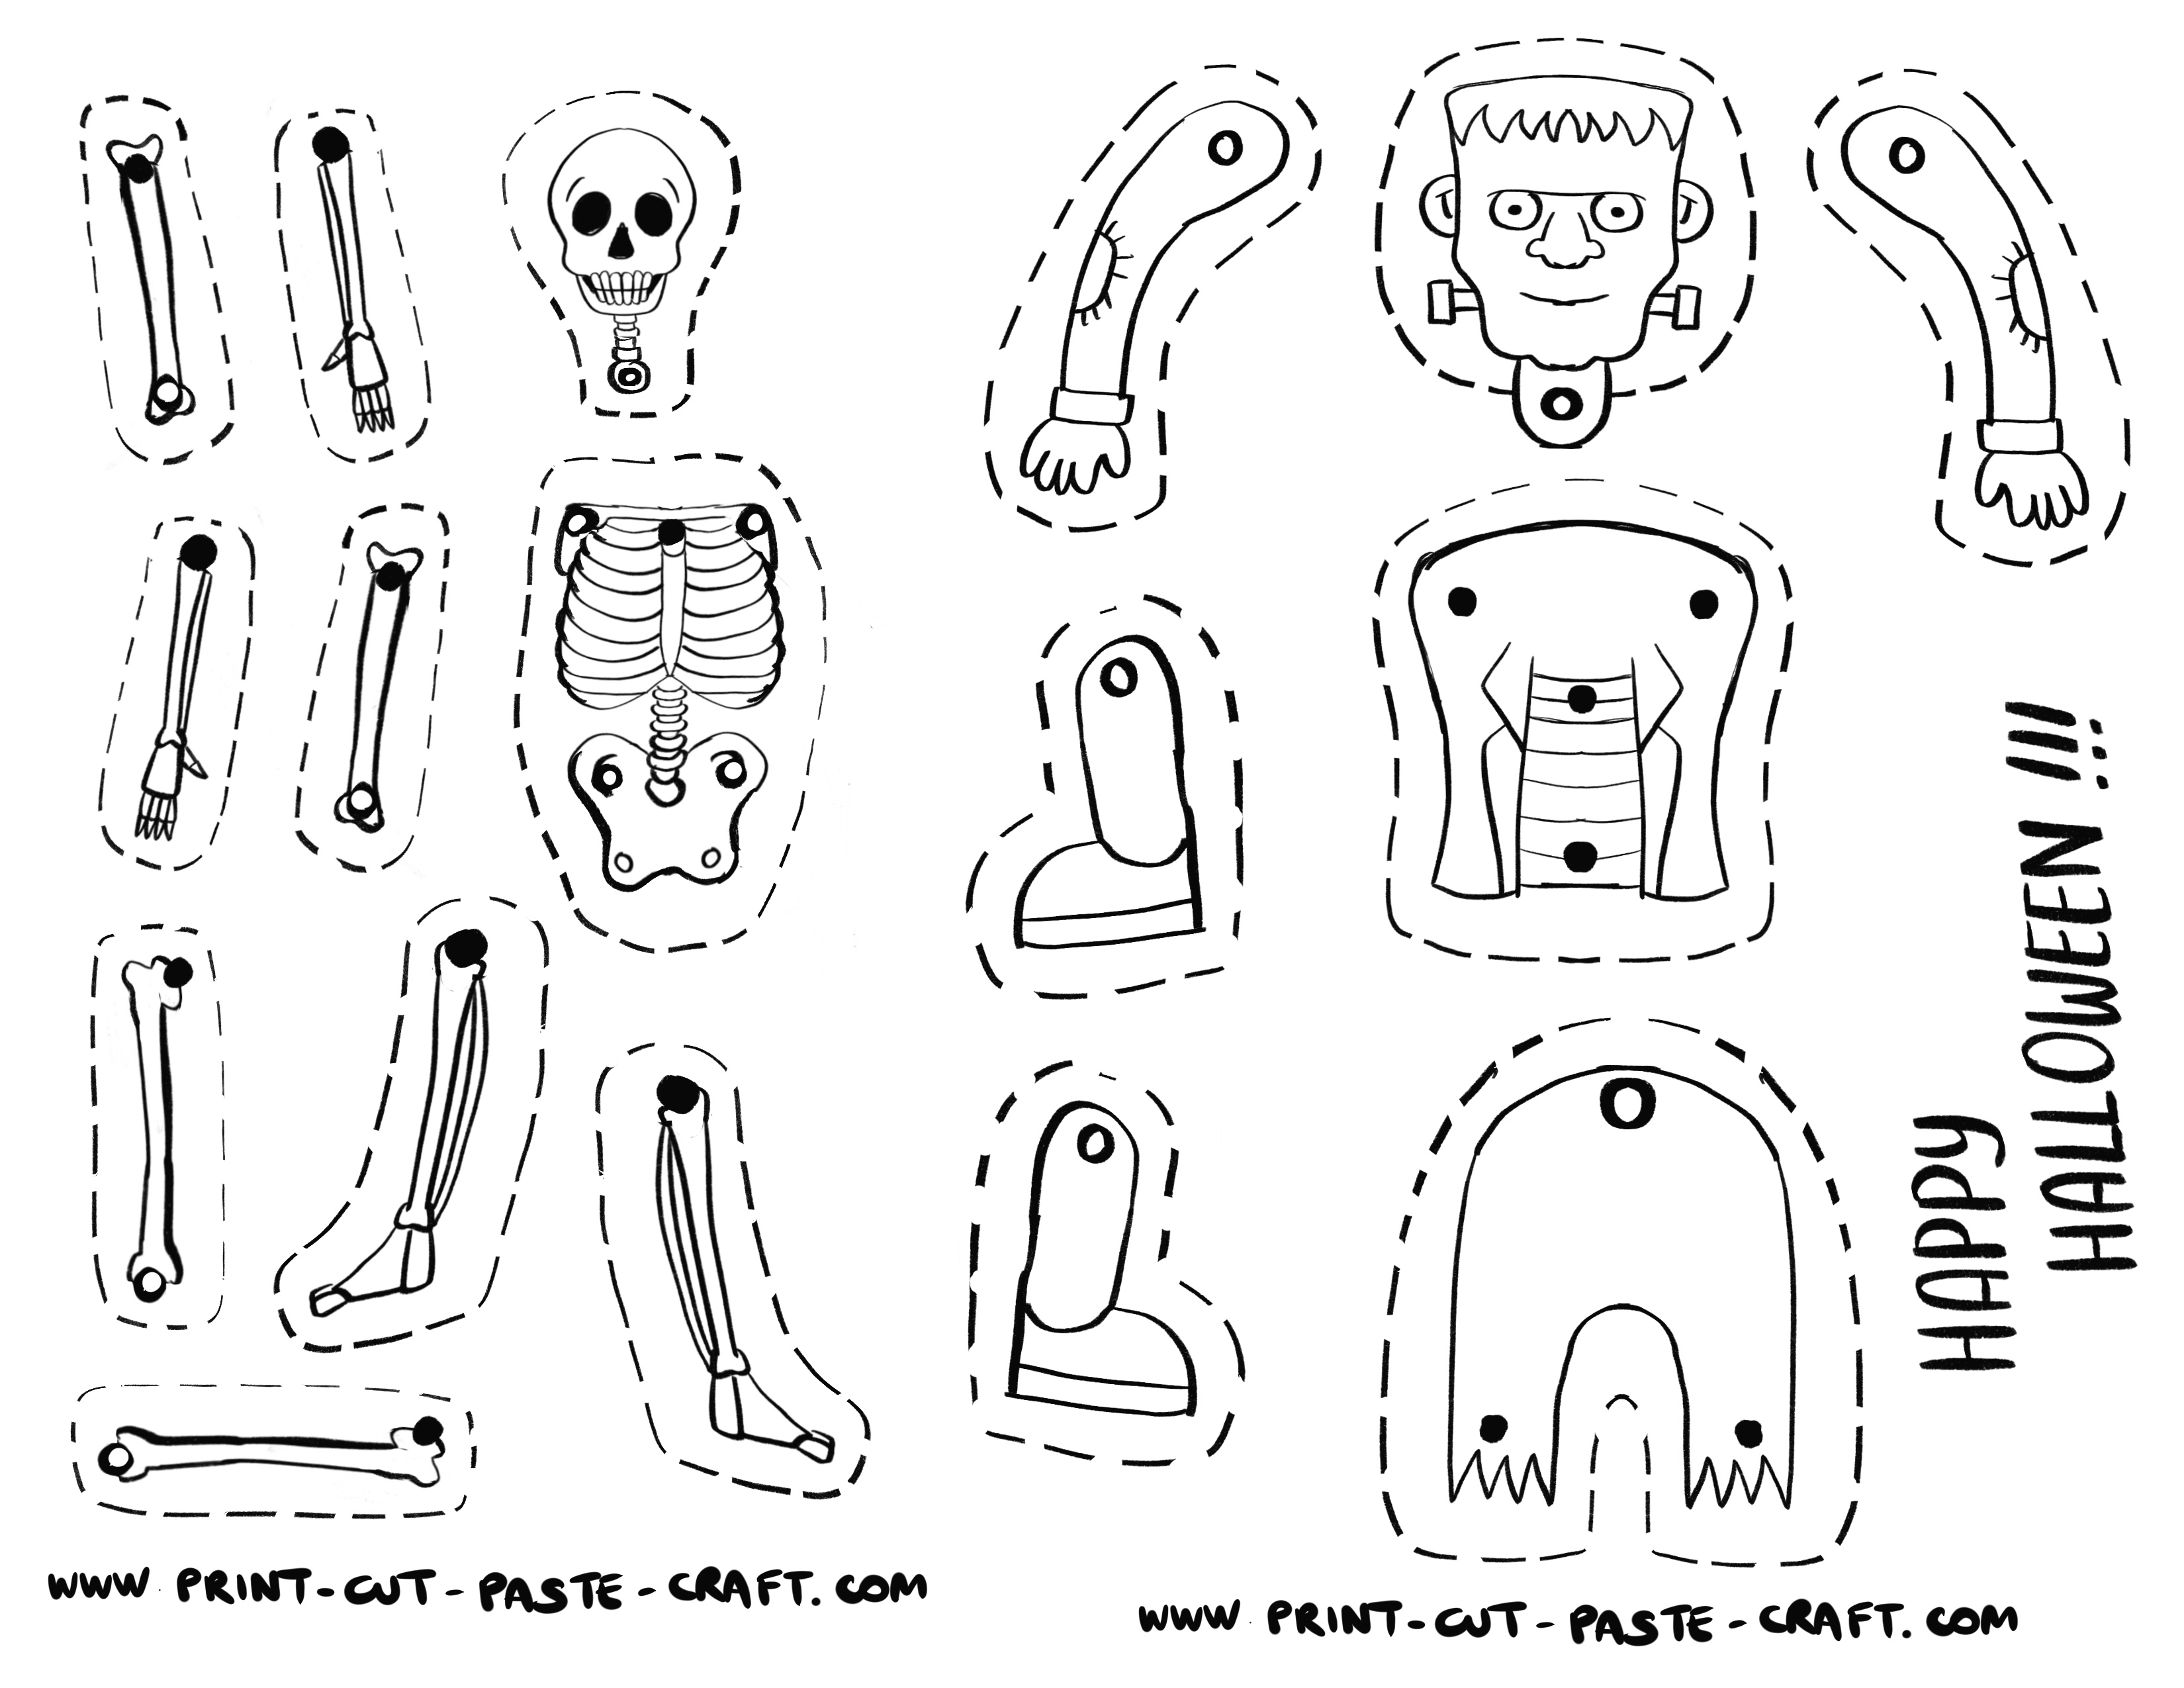 Free printable dancing skeleton and frankenstein craft from Print-cut-paste-craft.com